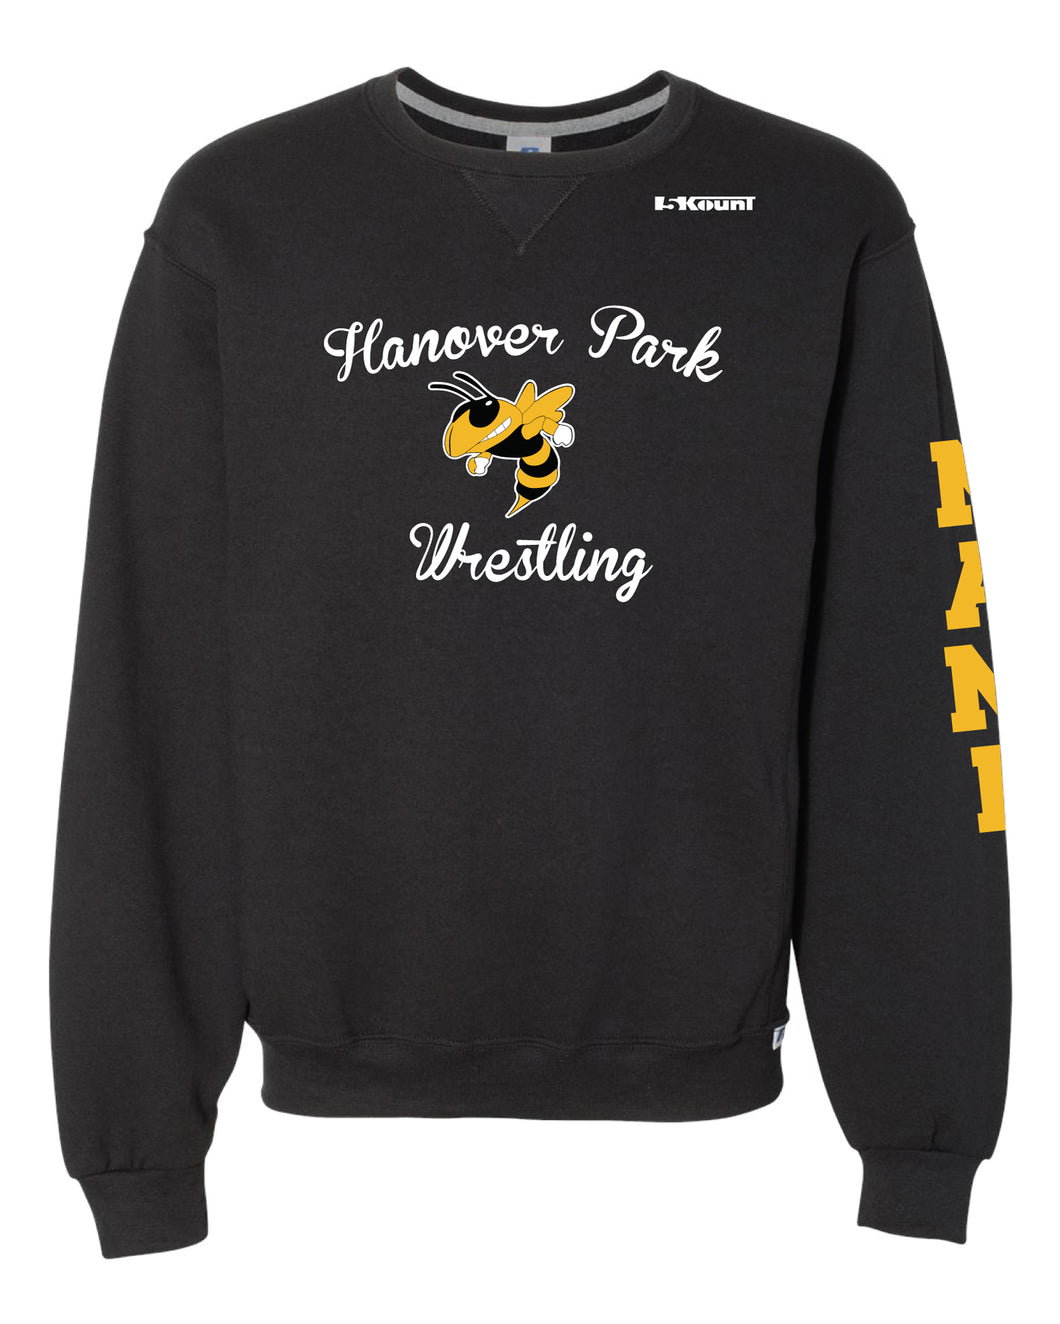 Hanover Park Wrestling Russell Athletic Cotton Crewneck Sweatshirt - Black - 5KounT2018